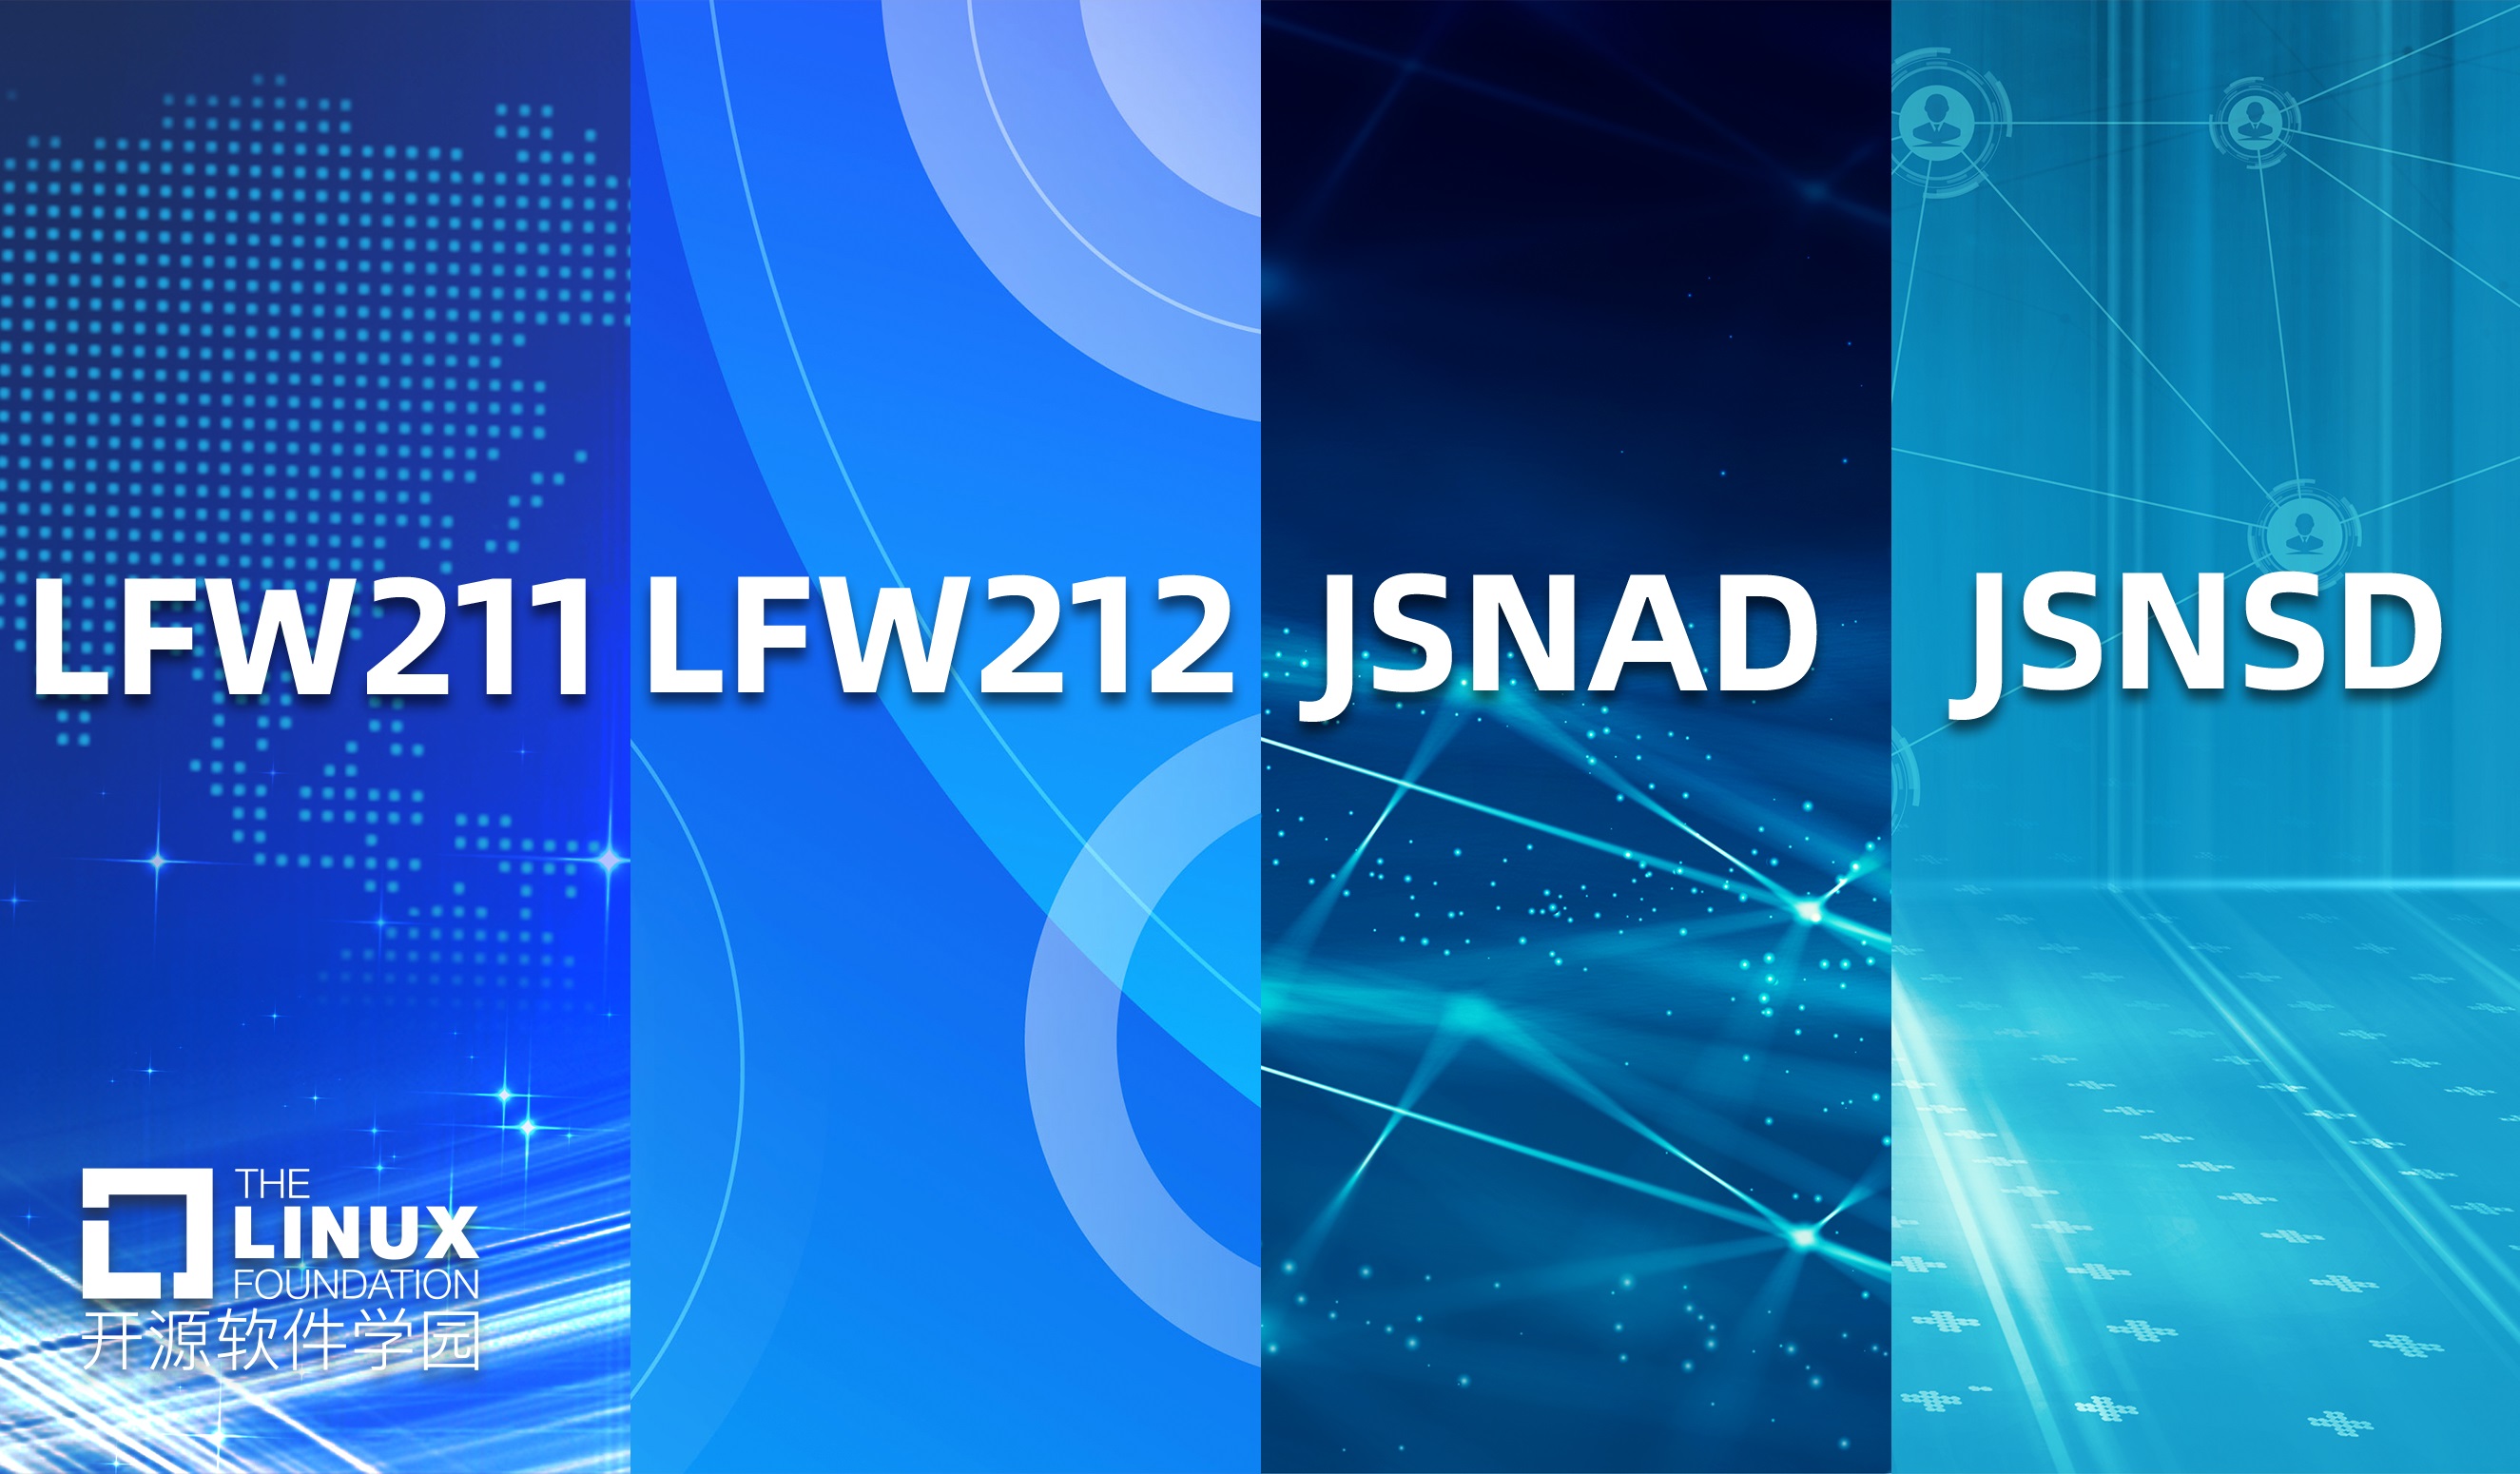 LFW211&LFW212&JSNAD&JSNSD超级套购